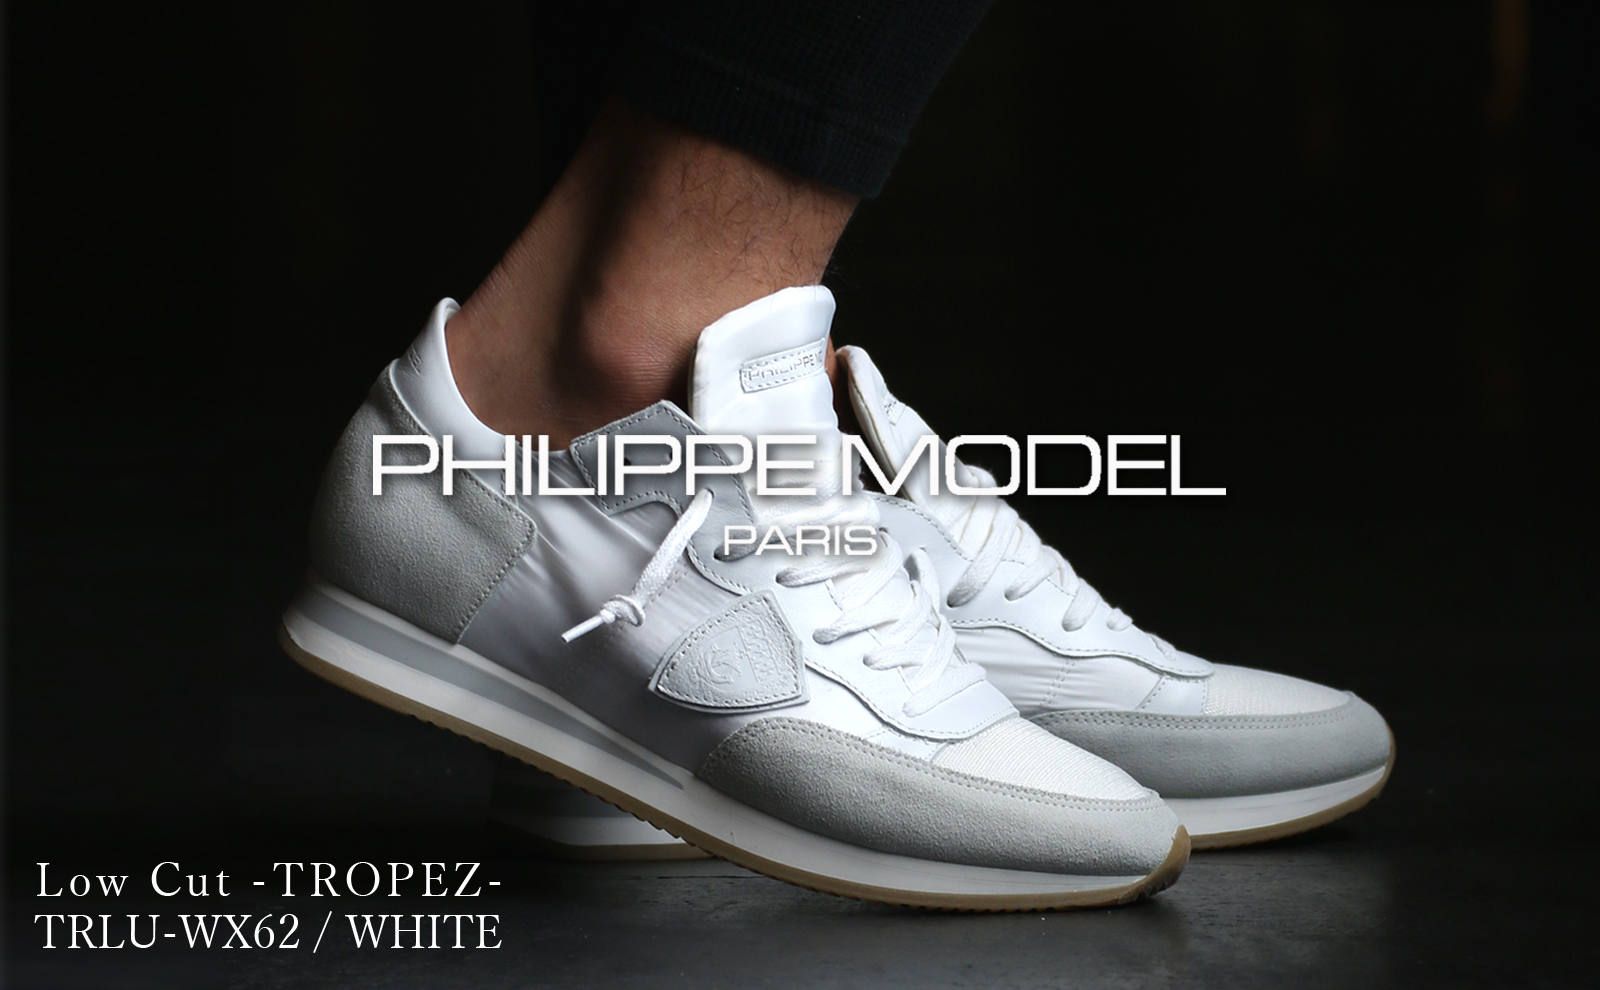 PHILIPPE MODEL】 TRLU-WX62 / 完売前に入手しておきたい”白トロペ ...